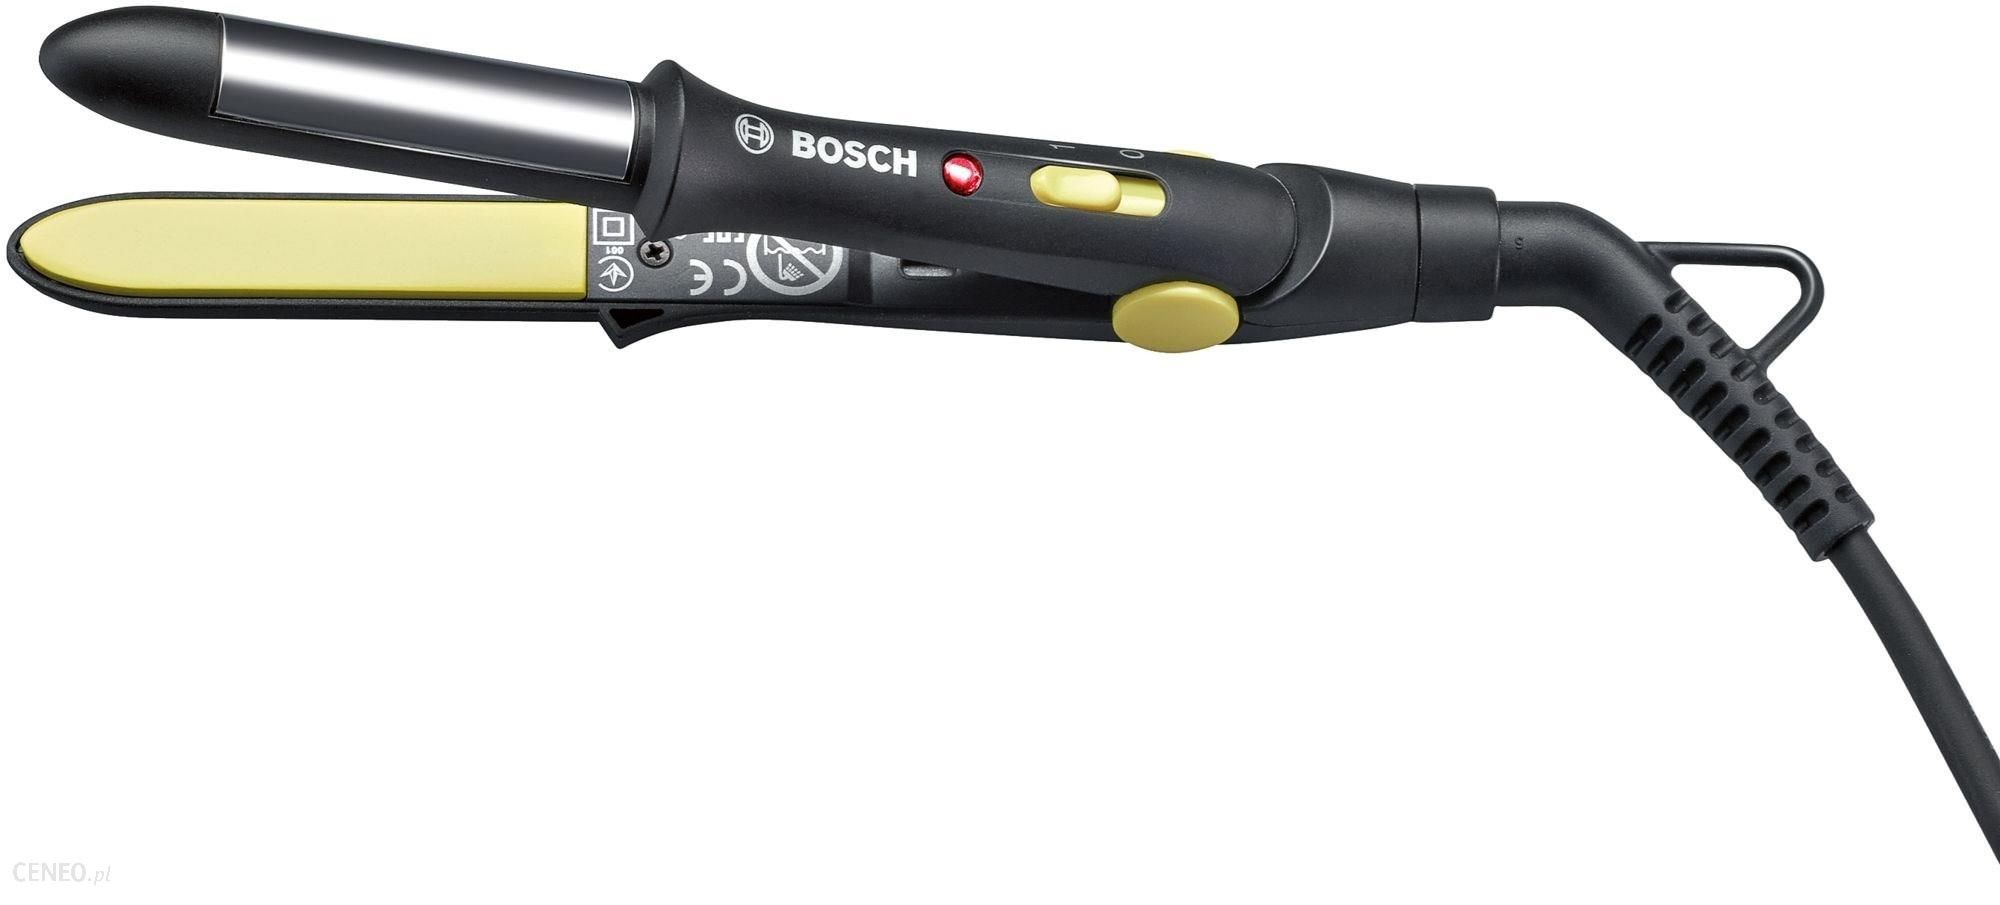 Prostownica PHS1151 Bosch